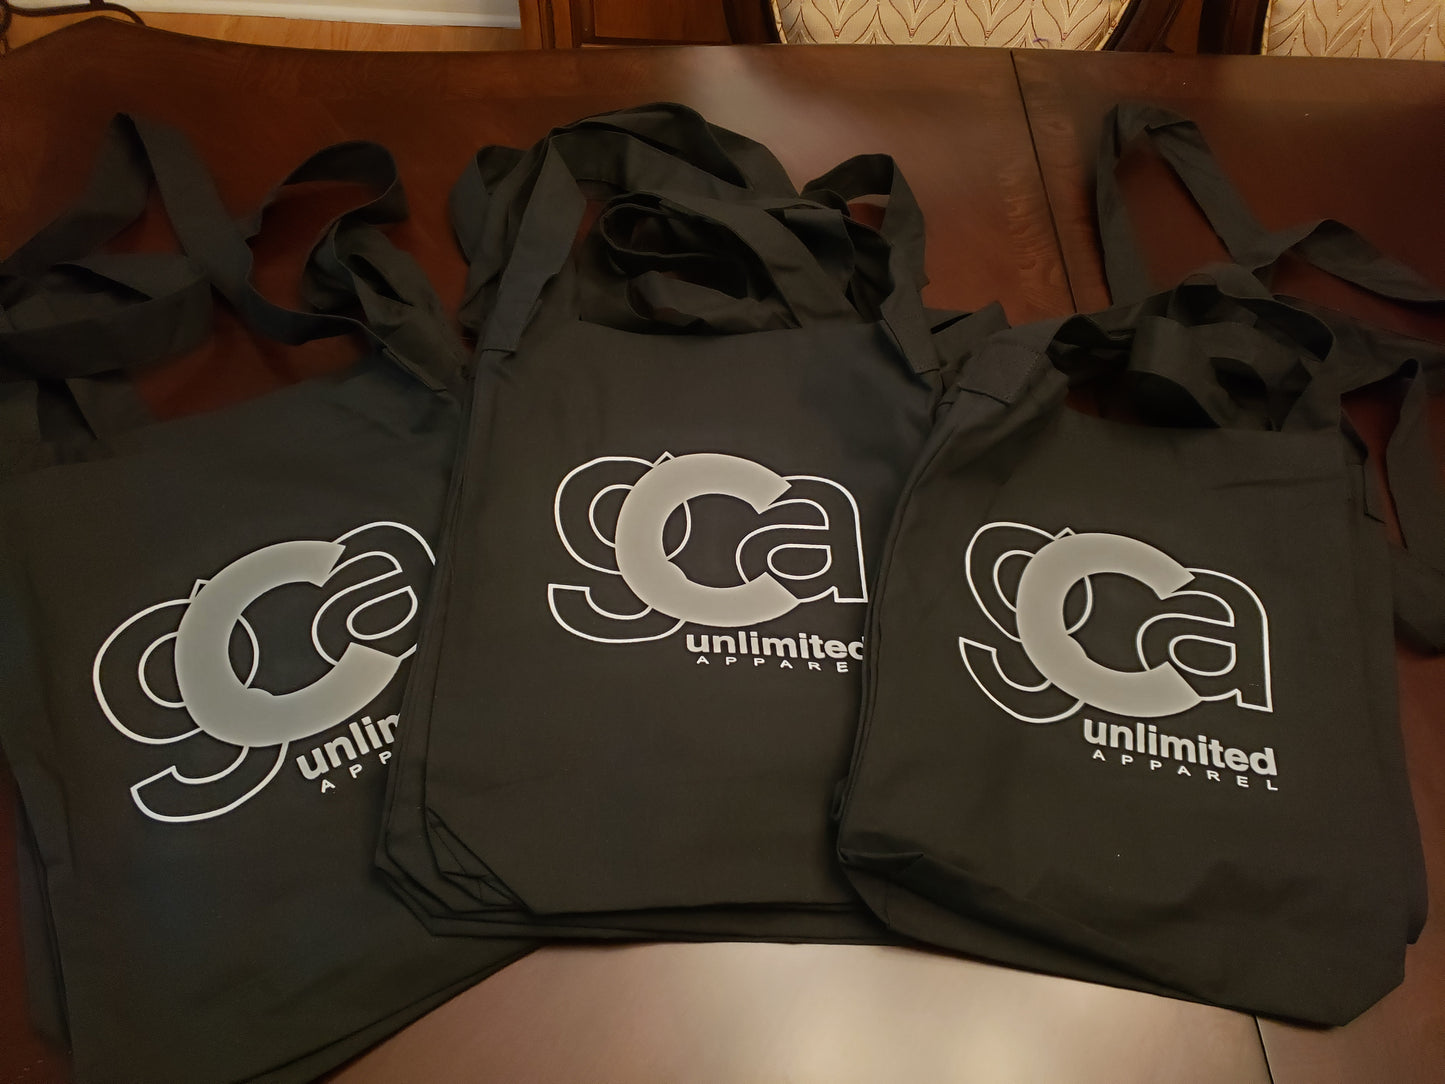 GCA Unlimited Apparel "Brand Canvas Sling Bag"